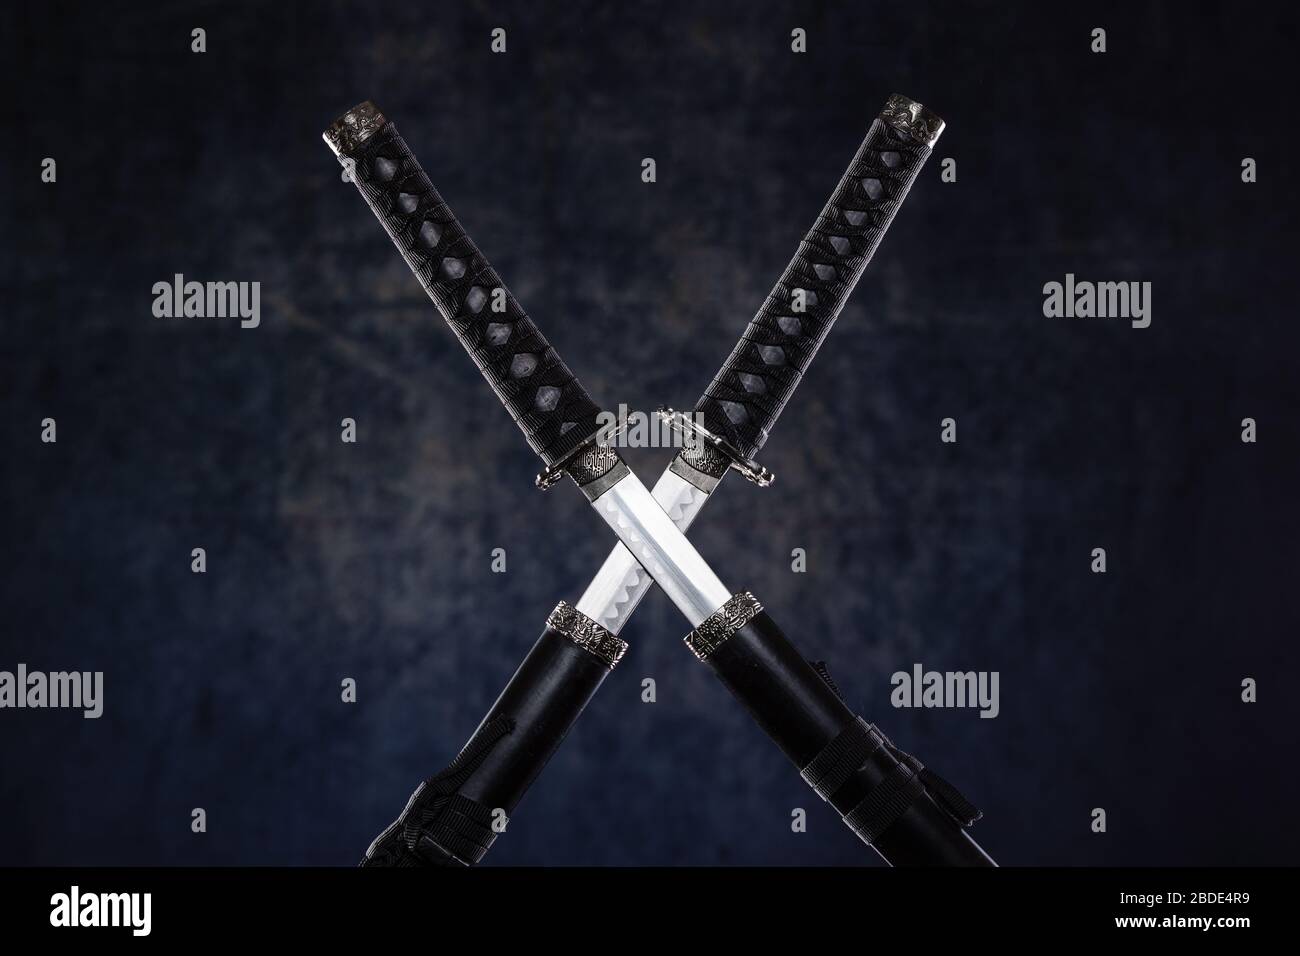 Two crossed katanas with partially drawn blades on dark background Stock Photo